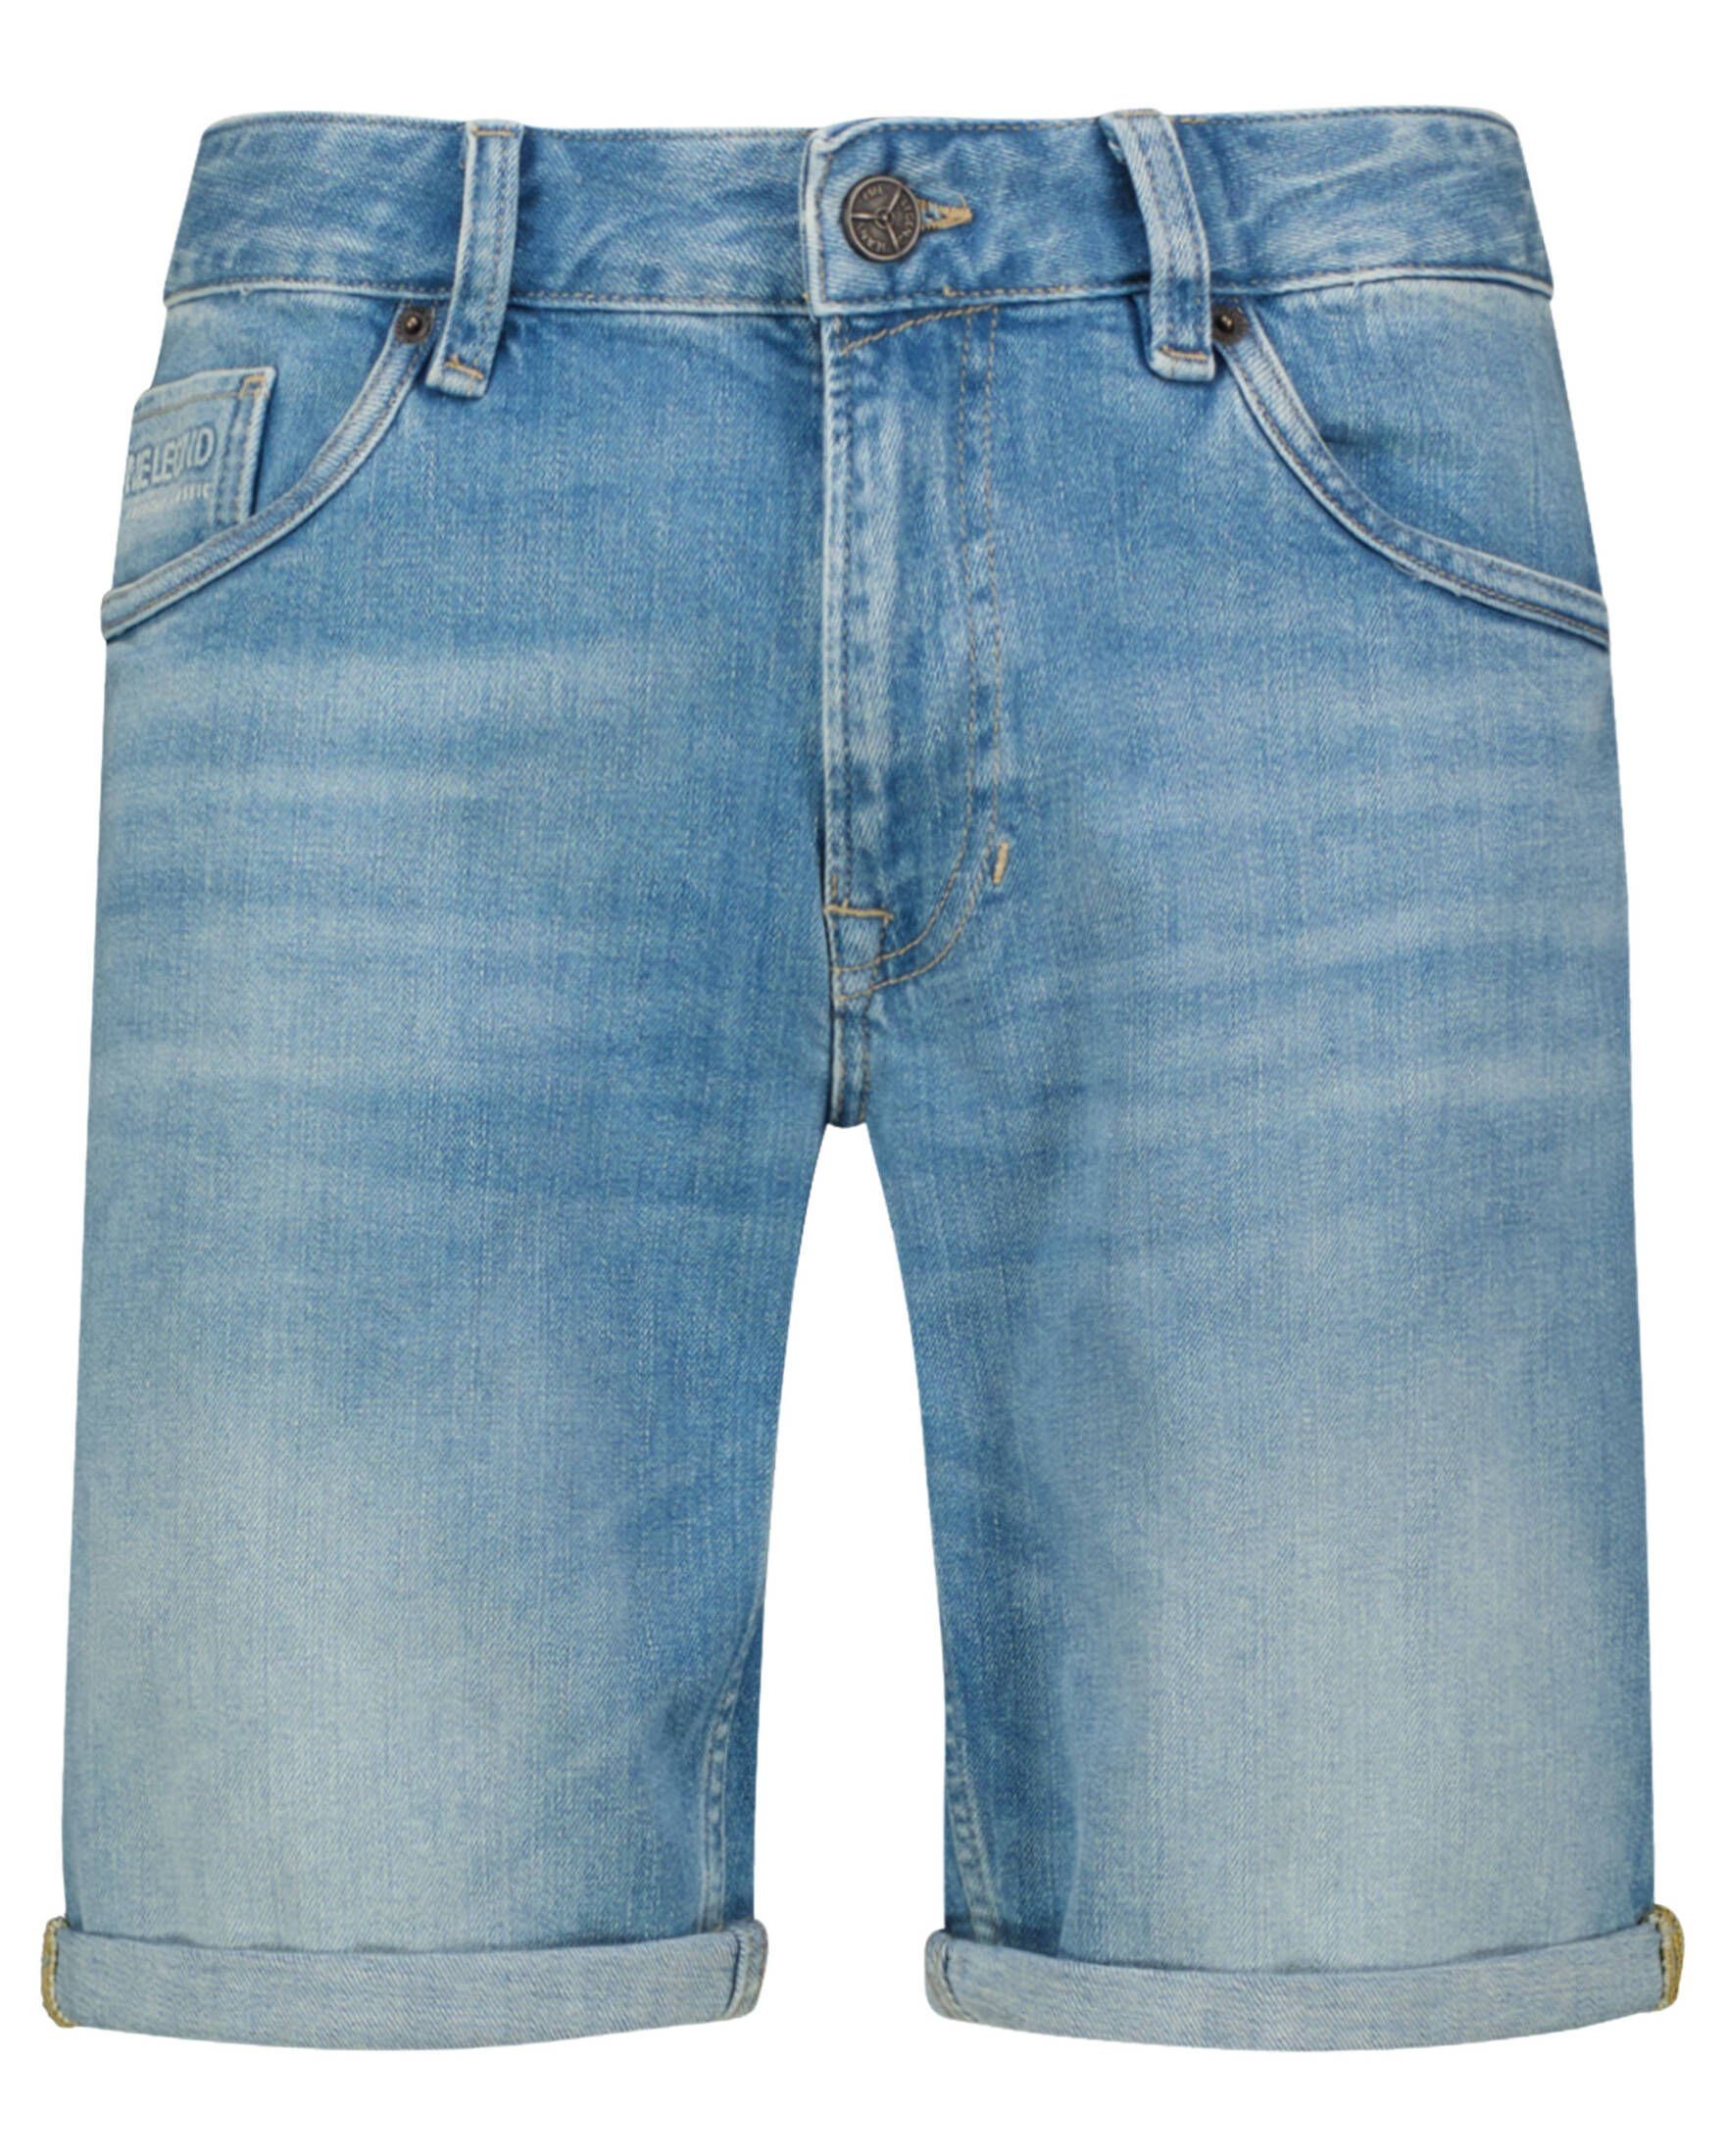 PME LEGEND Jeansshorts Herren Jeanshorts NIGHTFLIGHT Regular Fit bleached (80)